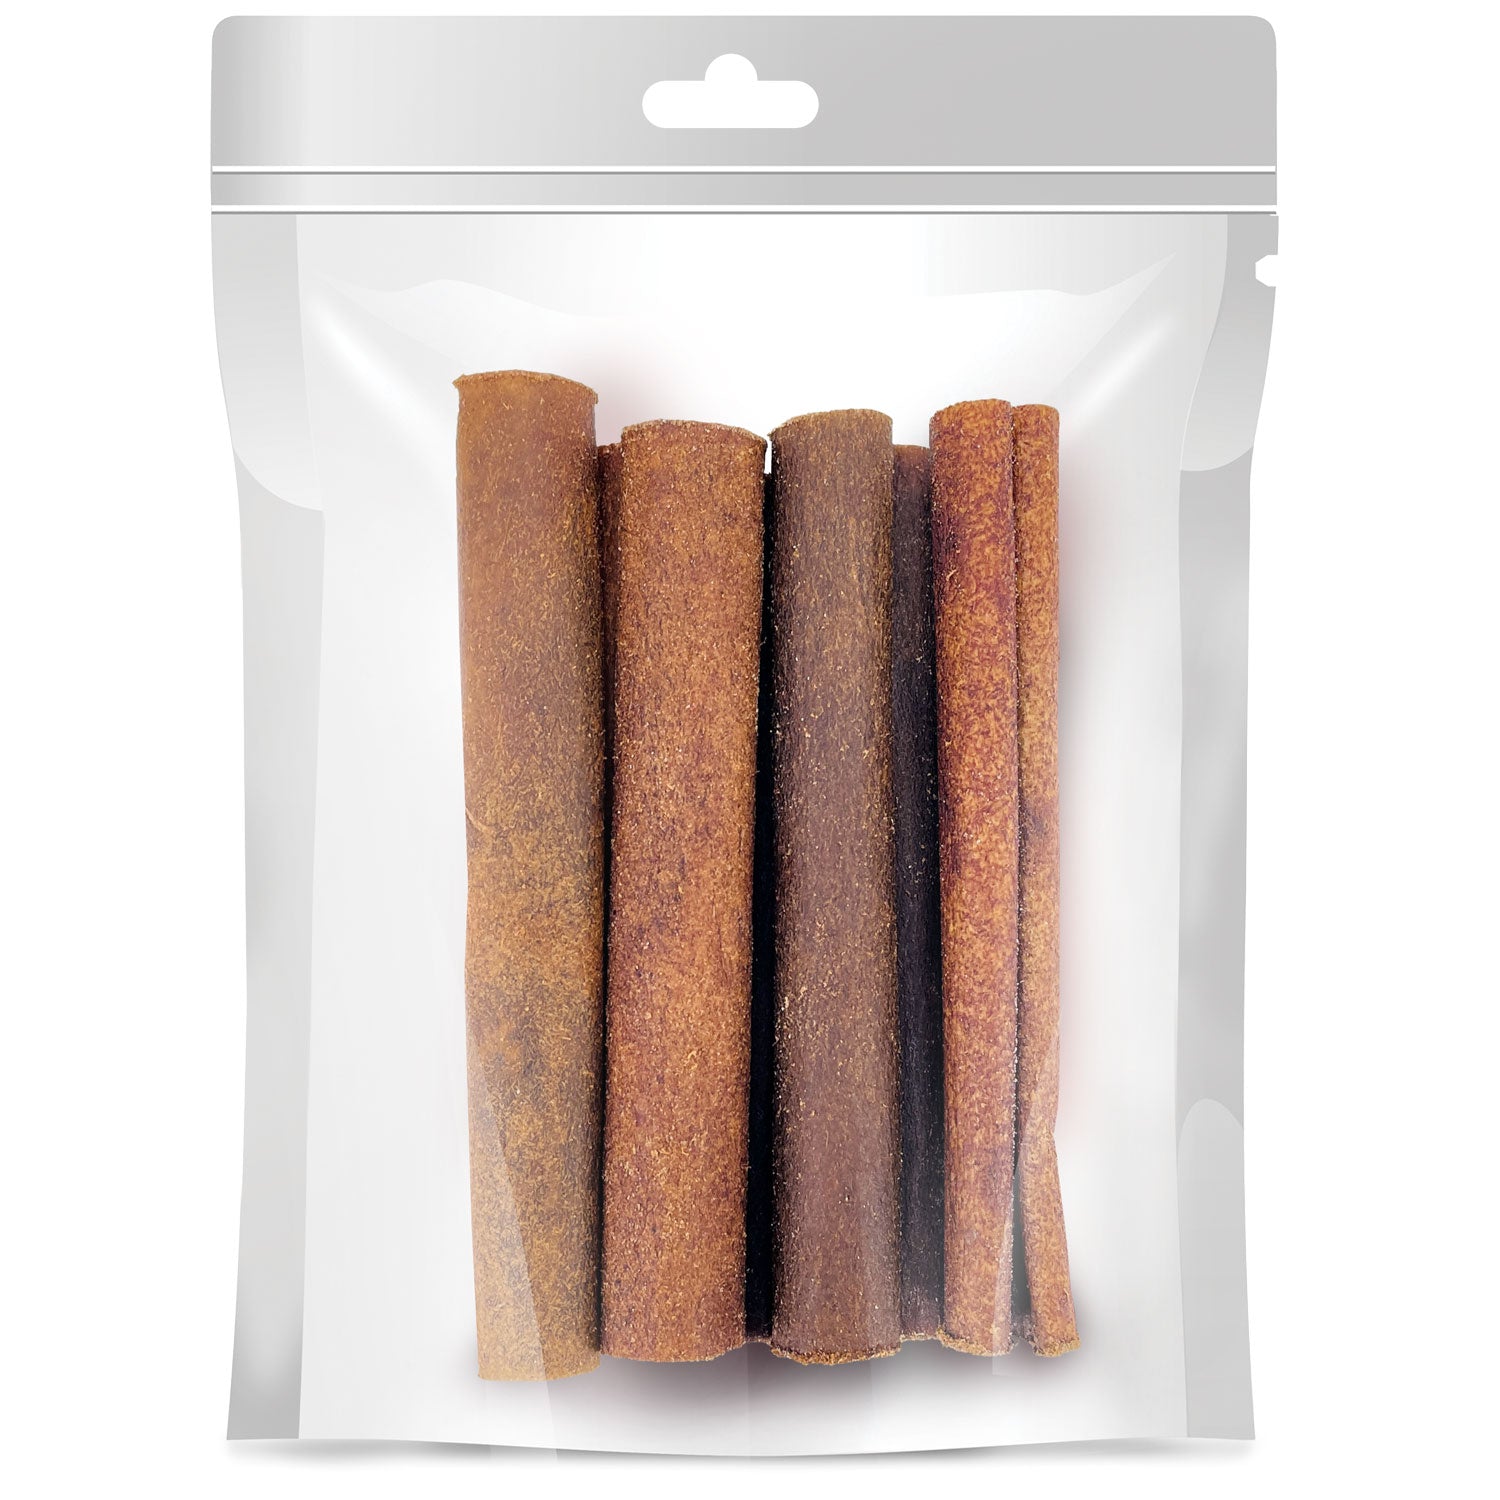 ValueBull USA Collagen Sticks, Premium Beef Dog Chews, 6" Jumbo, 400 Count RESALE PACKS (80 x 5 Count)